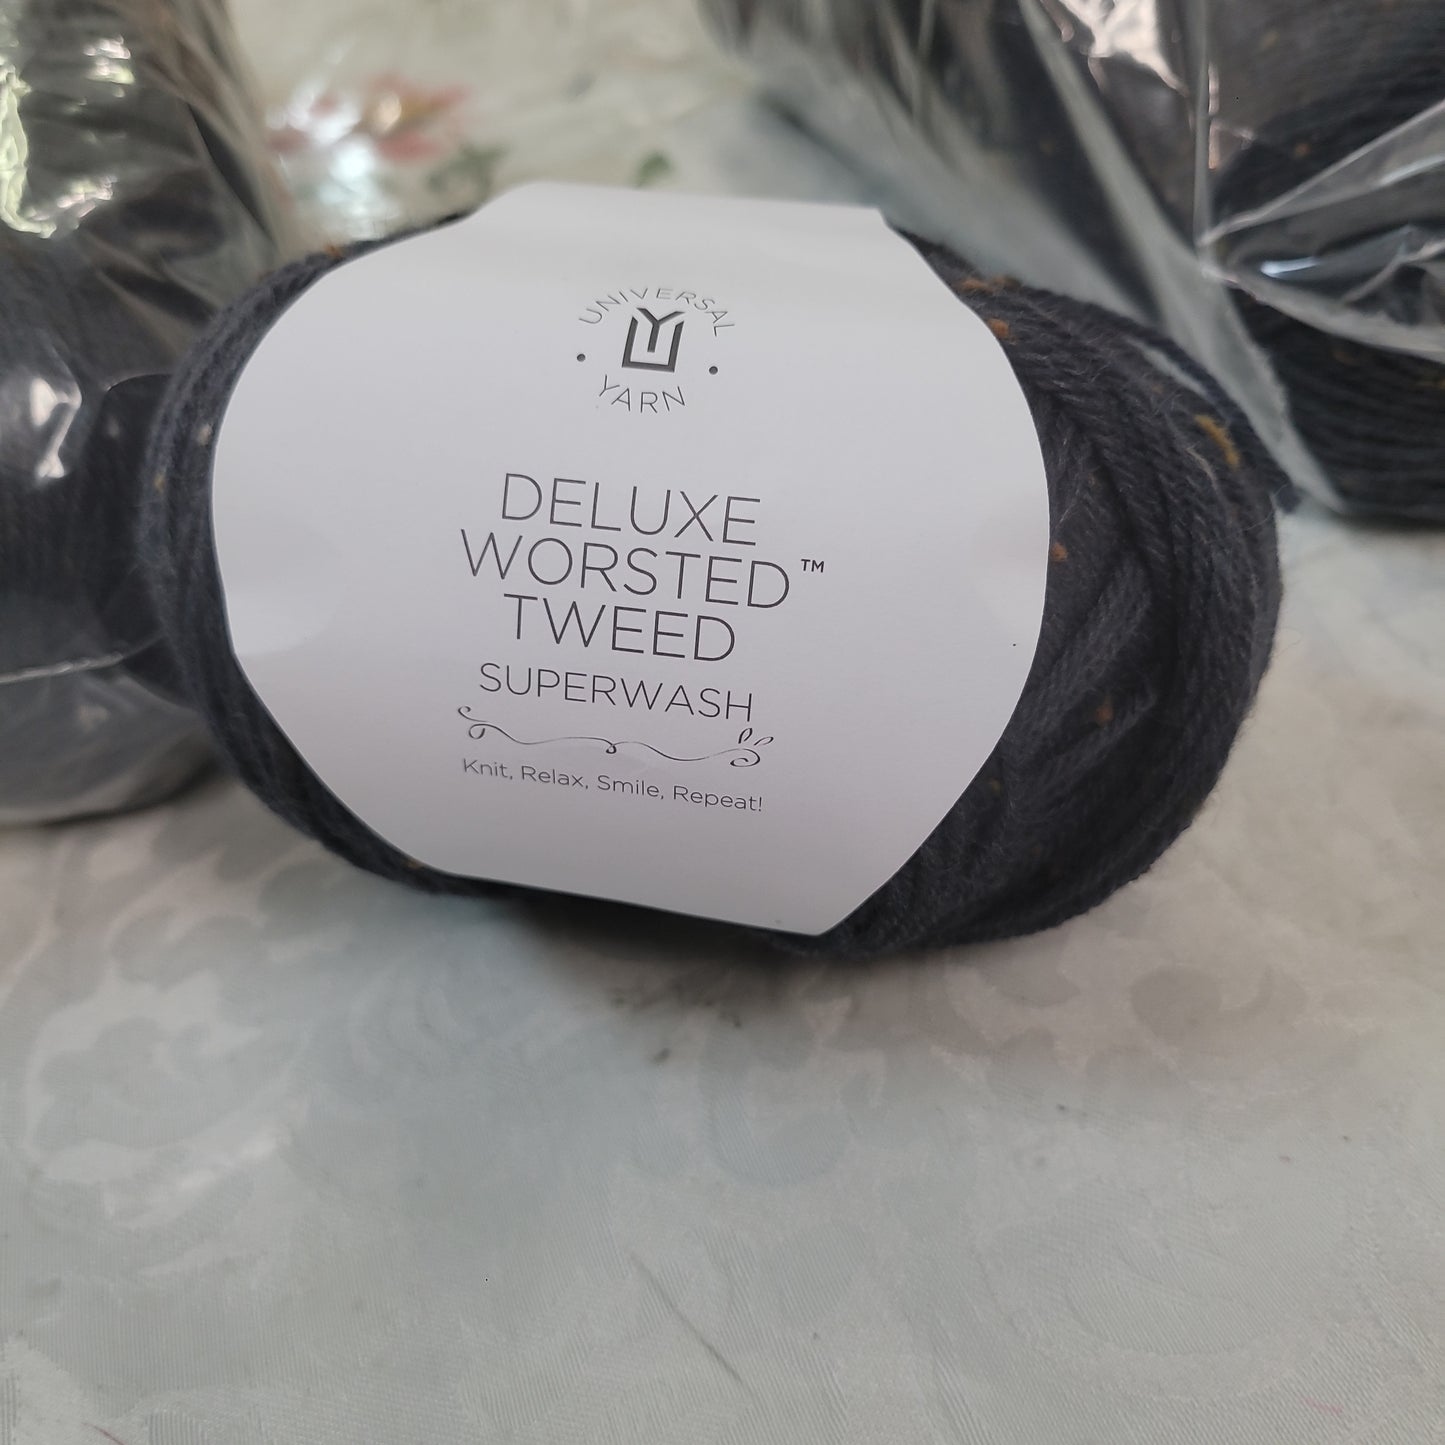 Deluxe worsted tweed